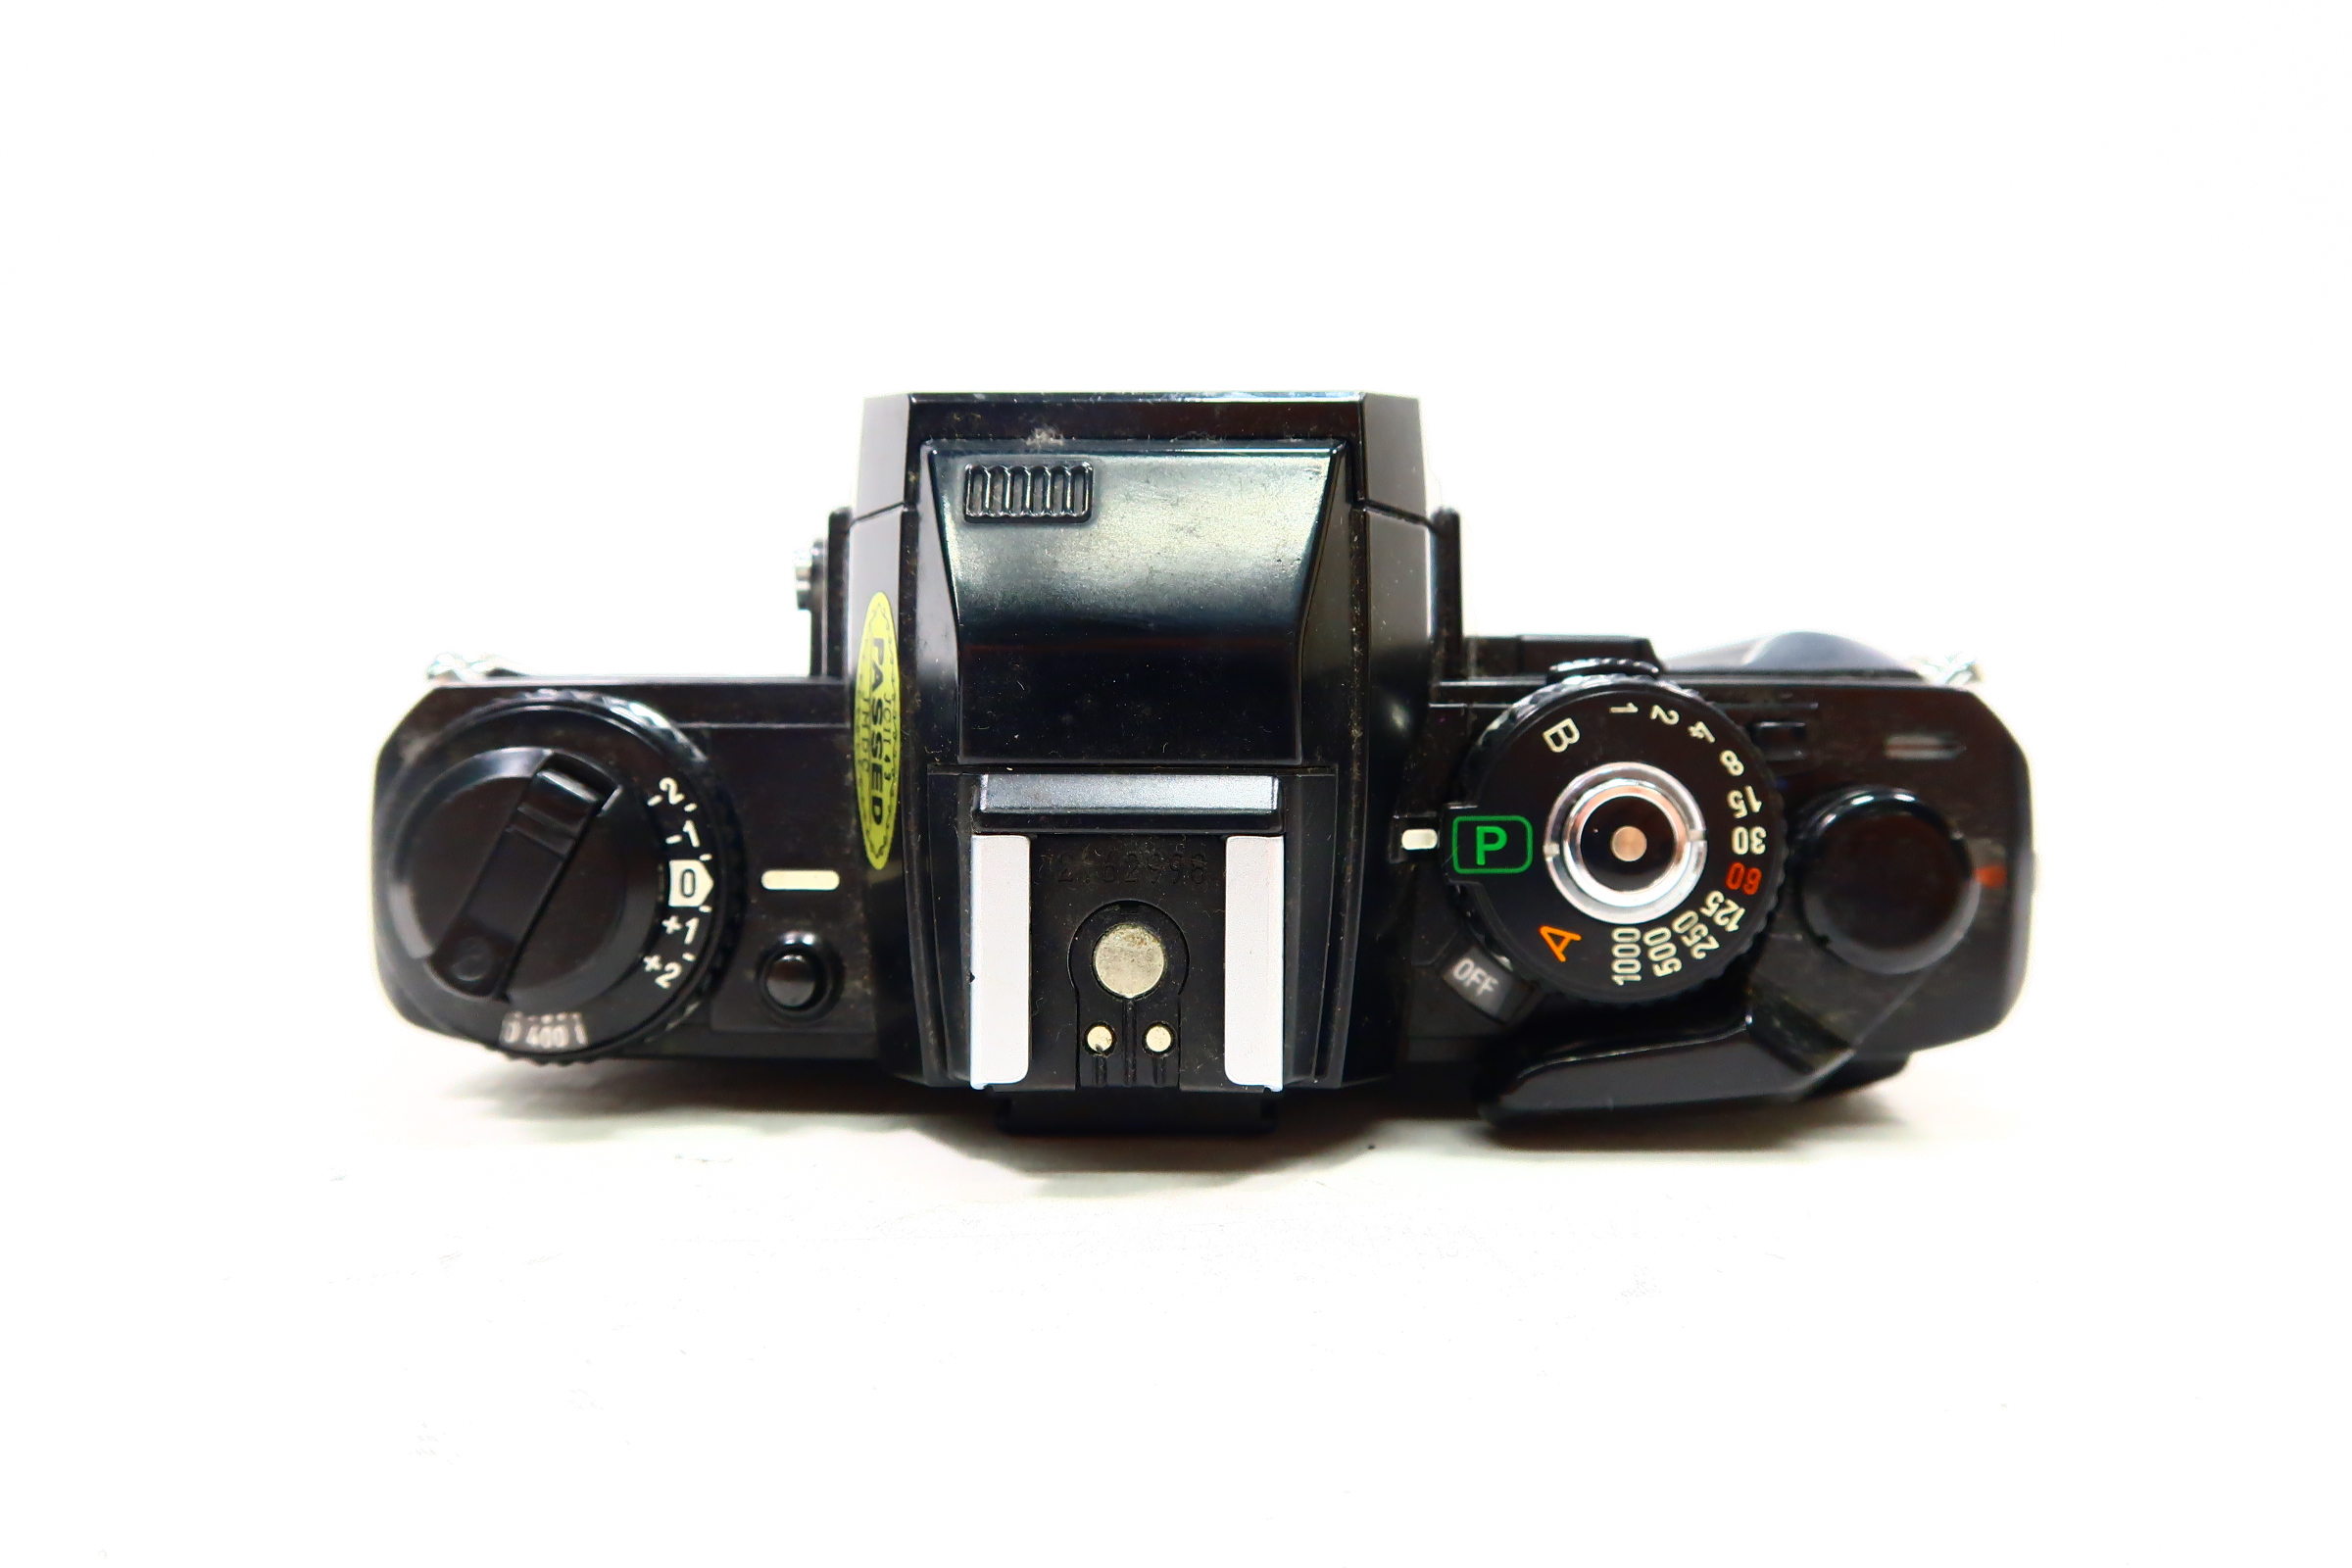 Minolta X-700 35mm Film SLR Camera